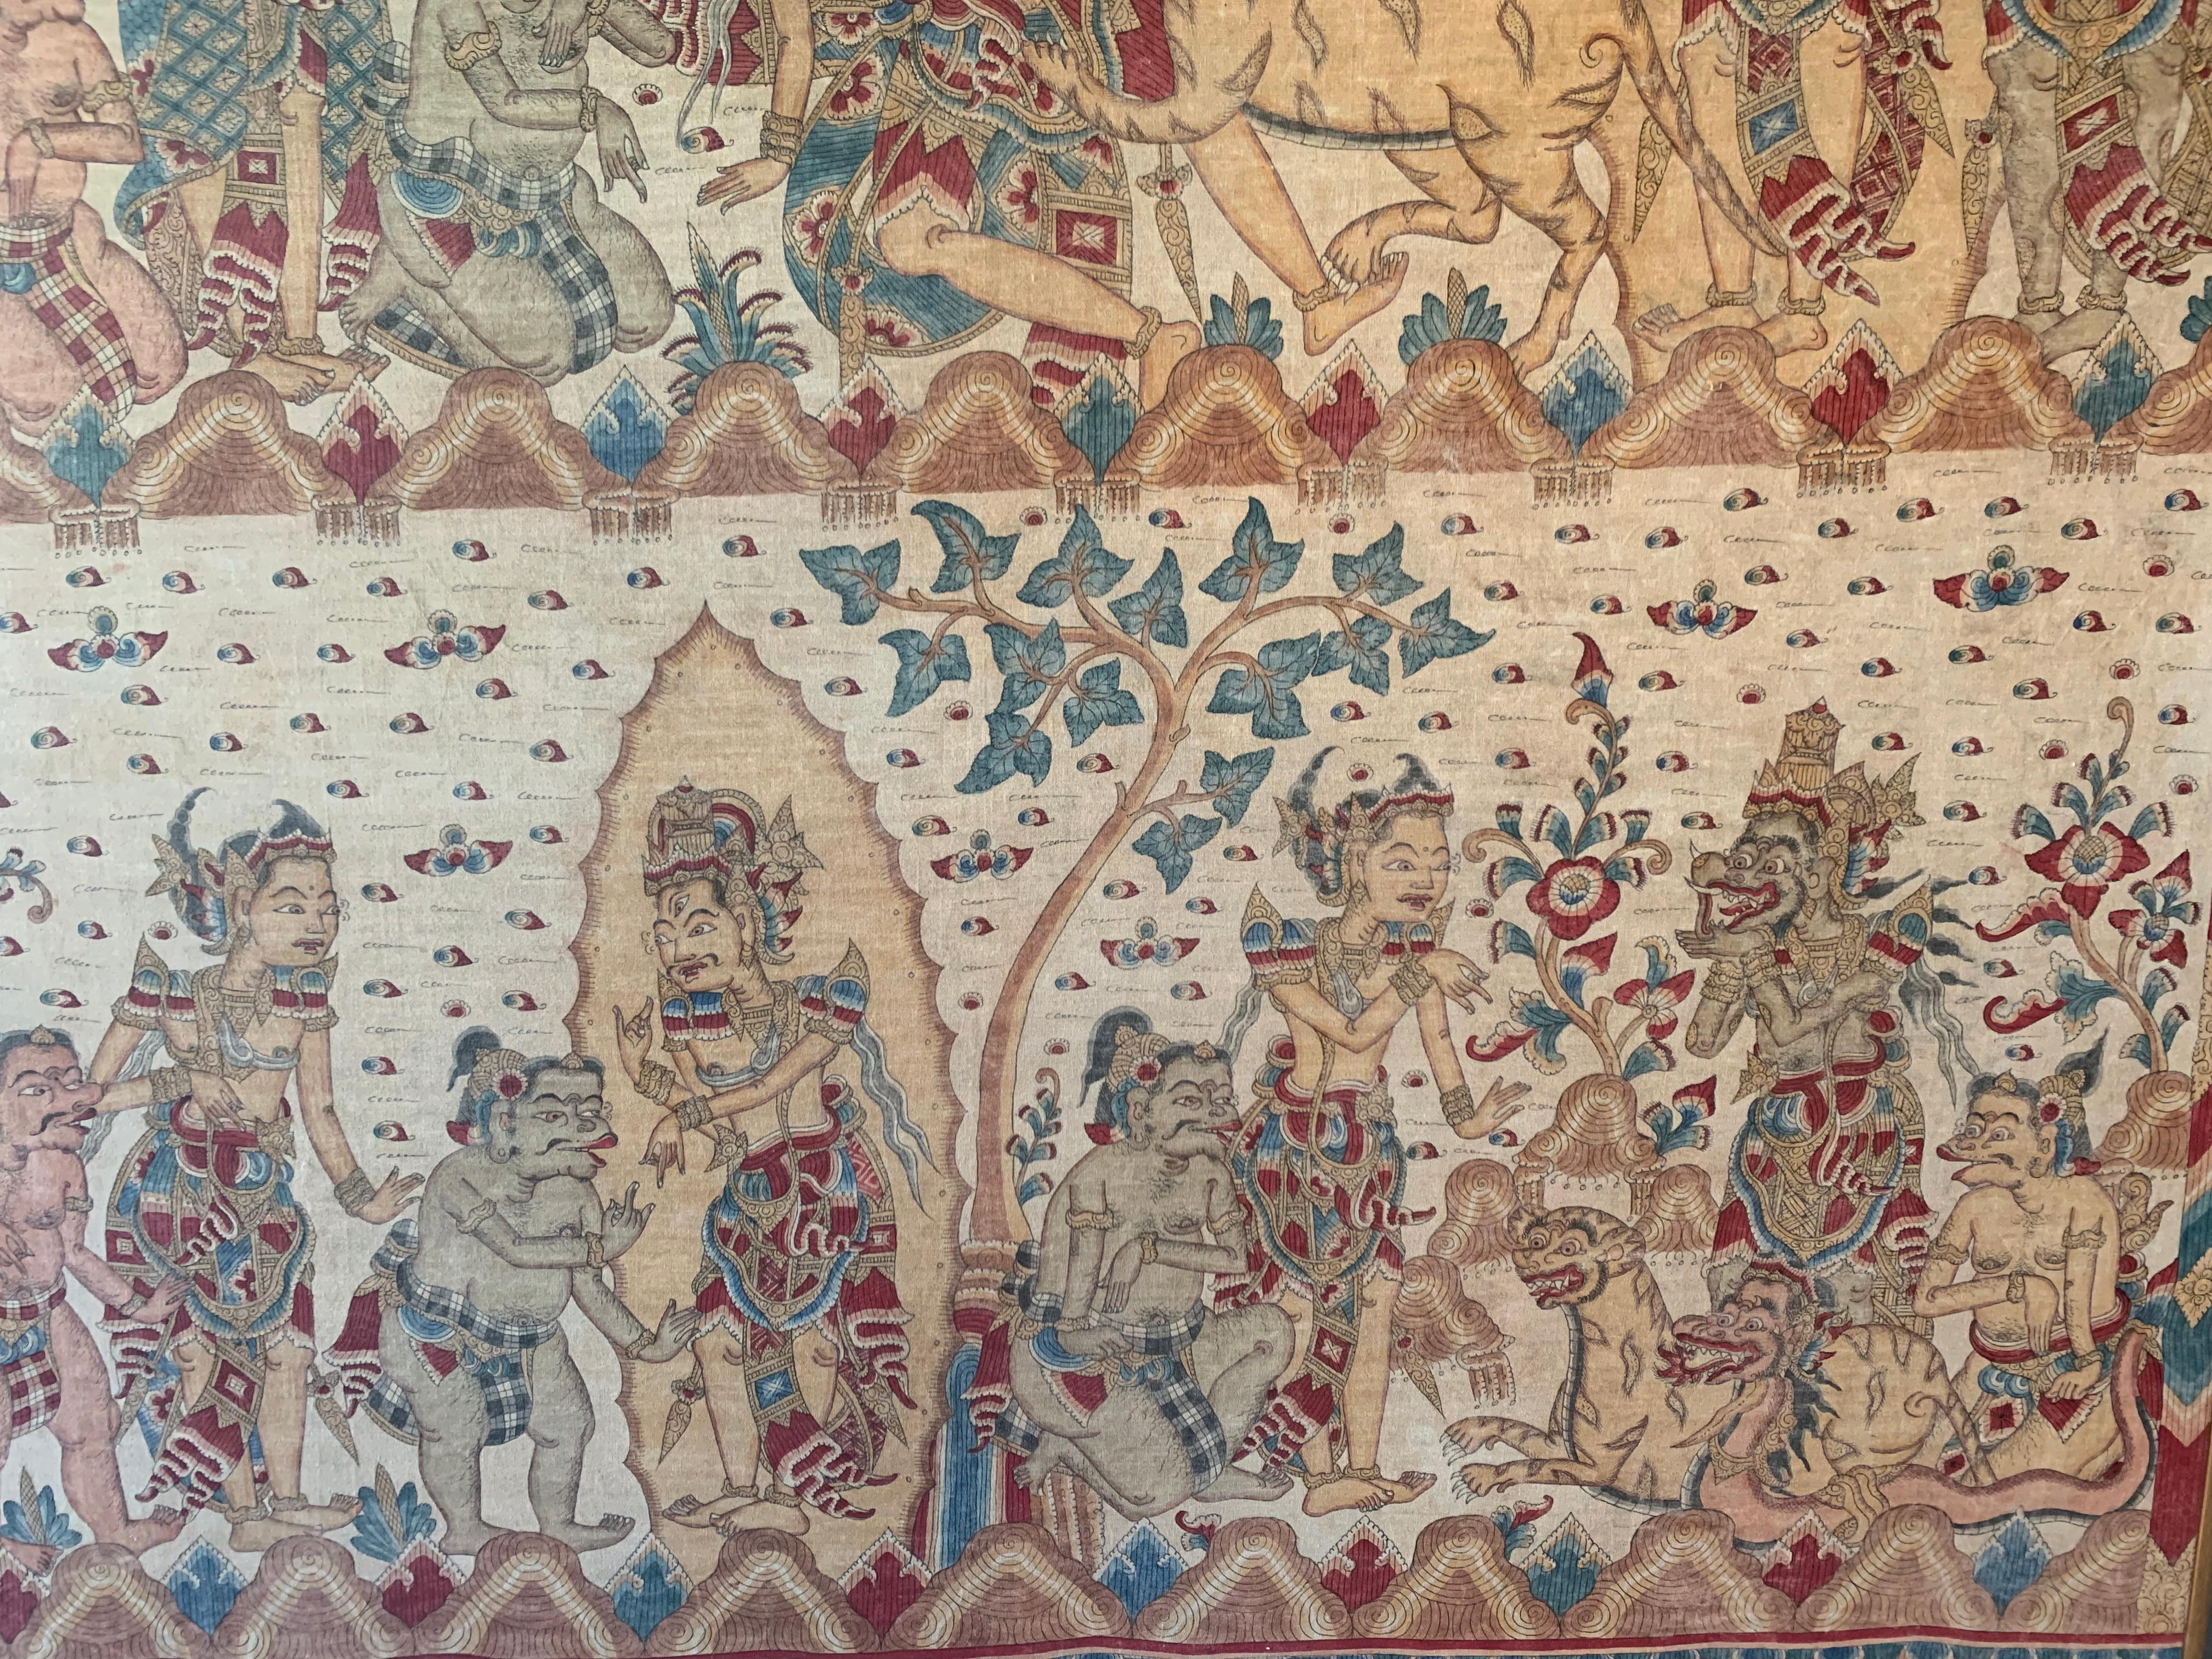 Bali Hindu Textile Framed 'Kamasan' Painting, Indonesia C. 1950 For Sale 1